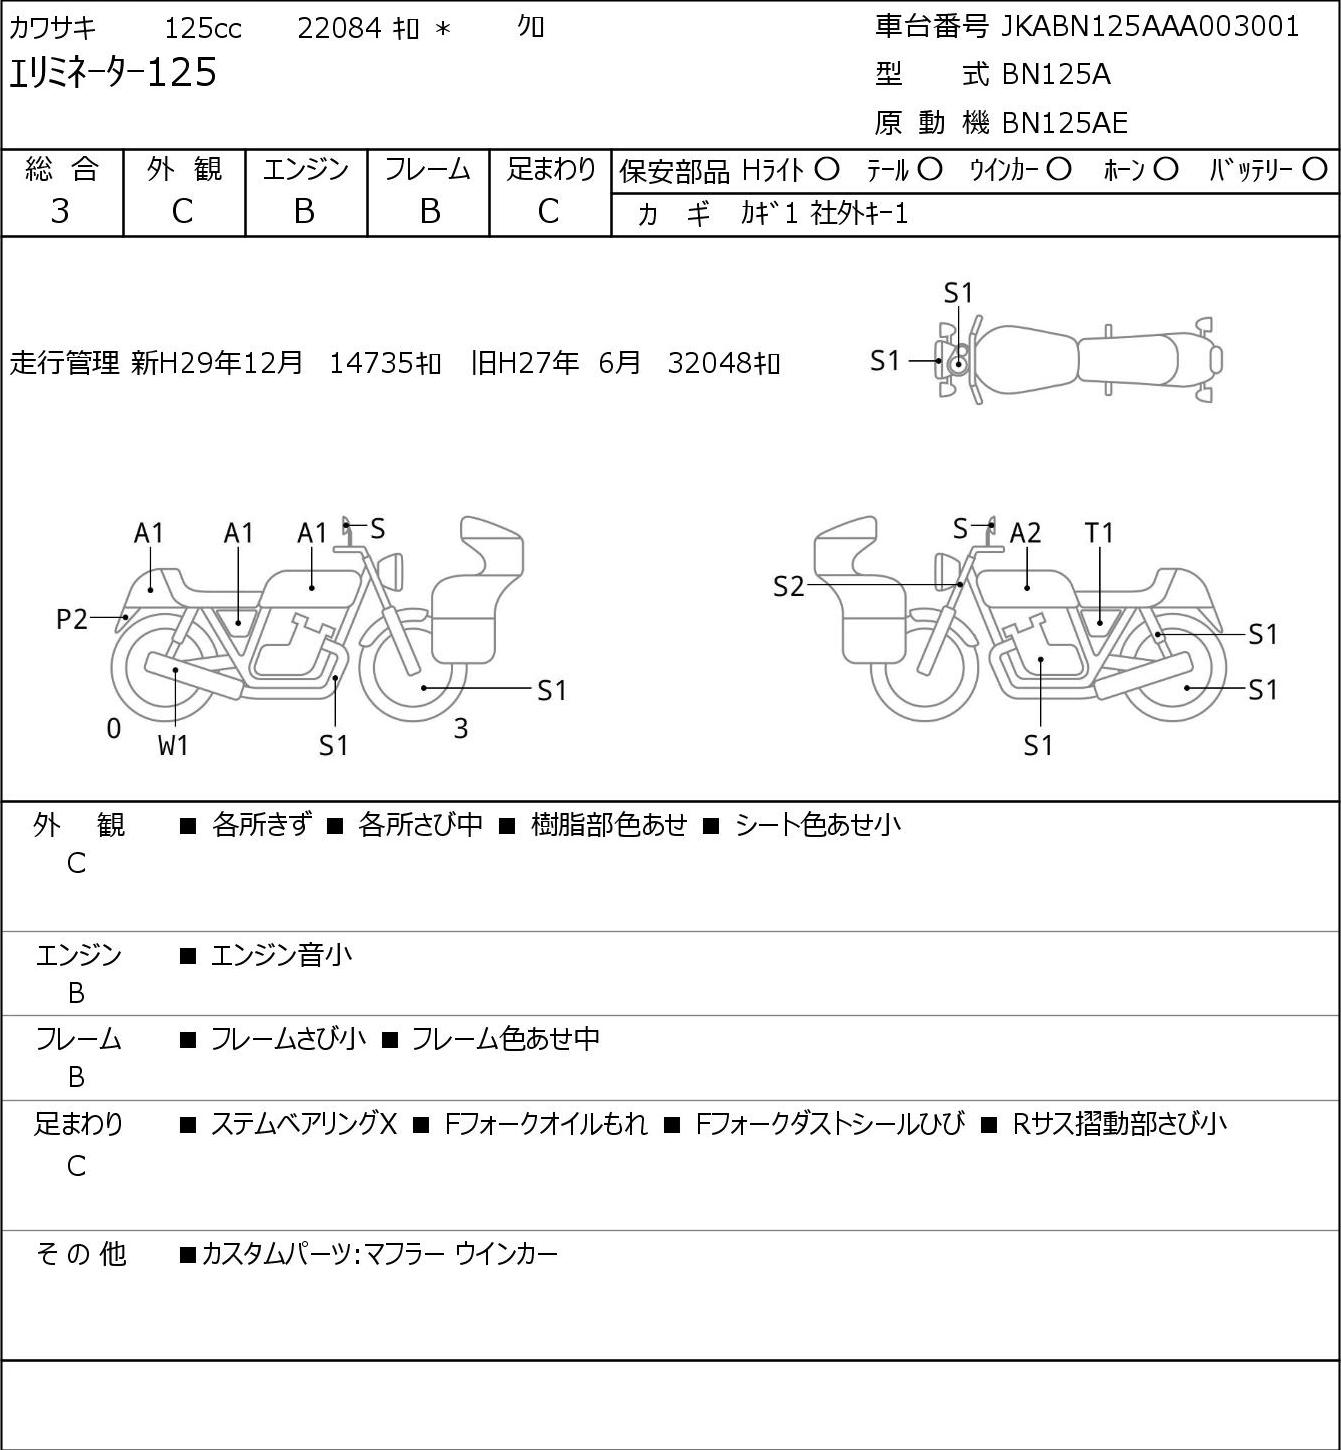 Kawasaki ELIMINATOR 125 BN125A - купить недорого